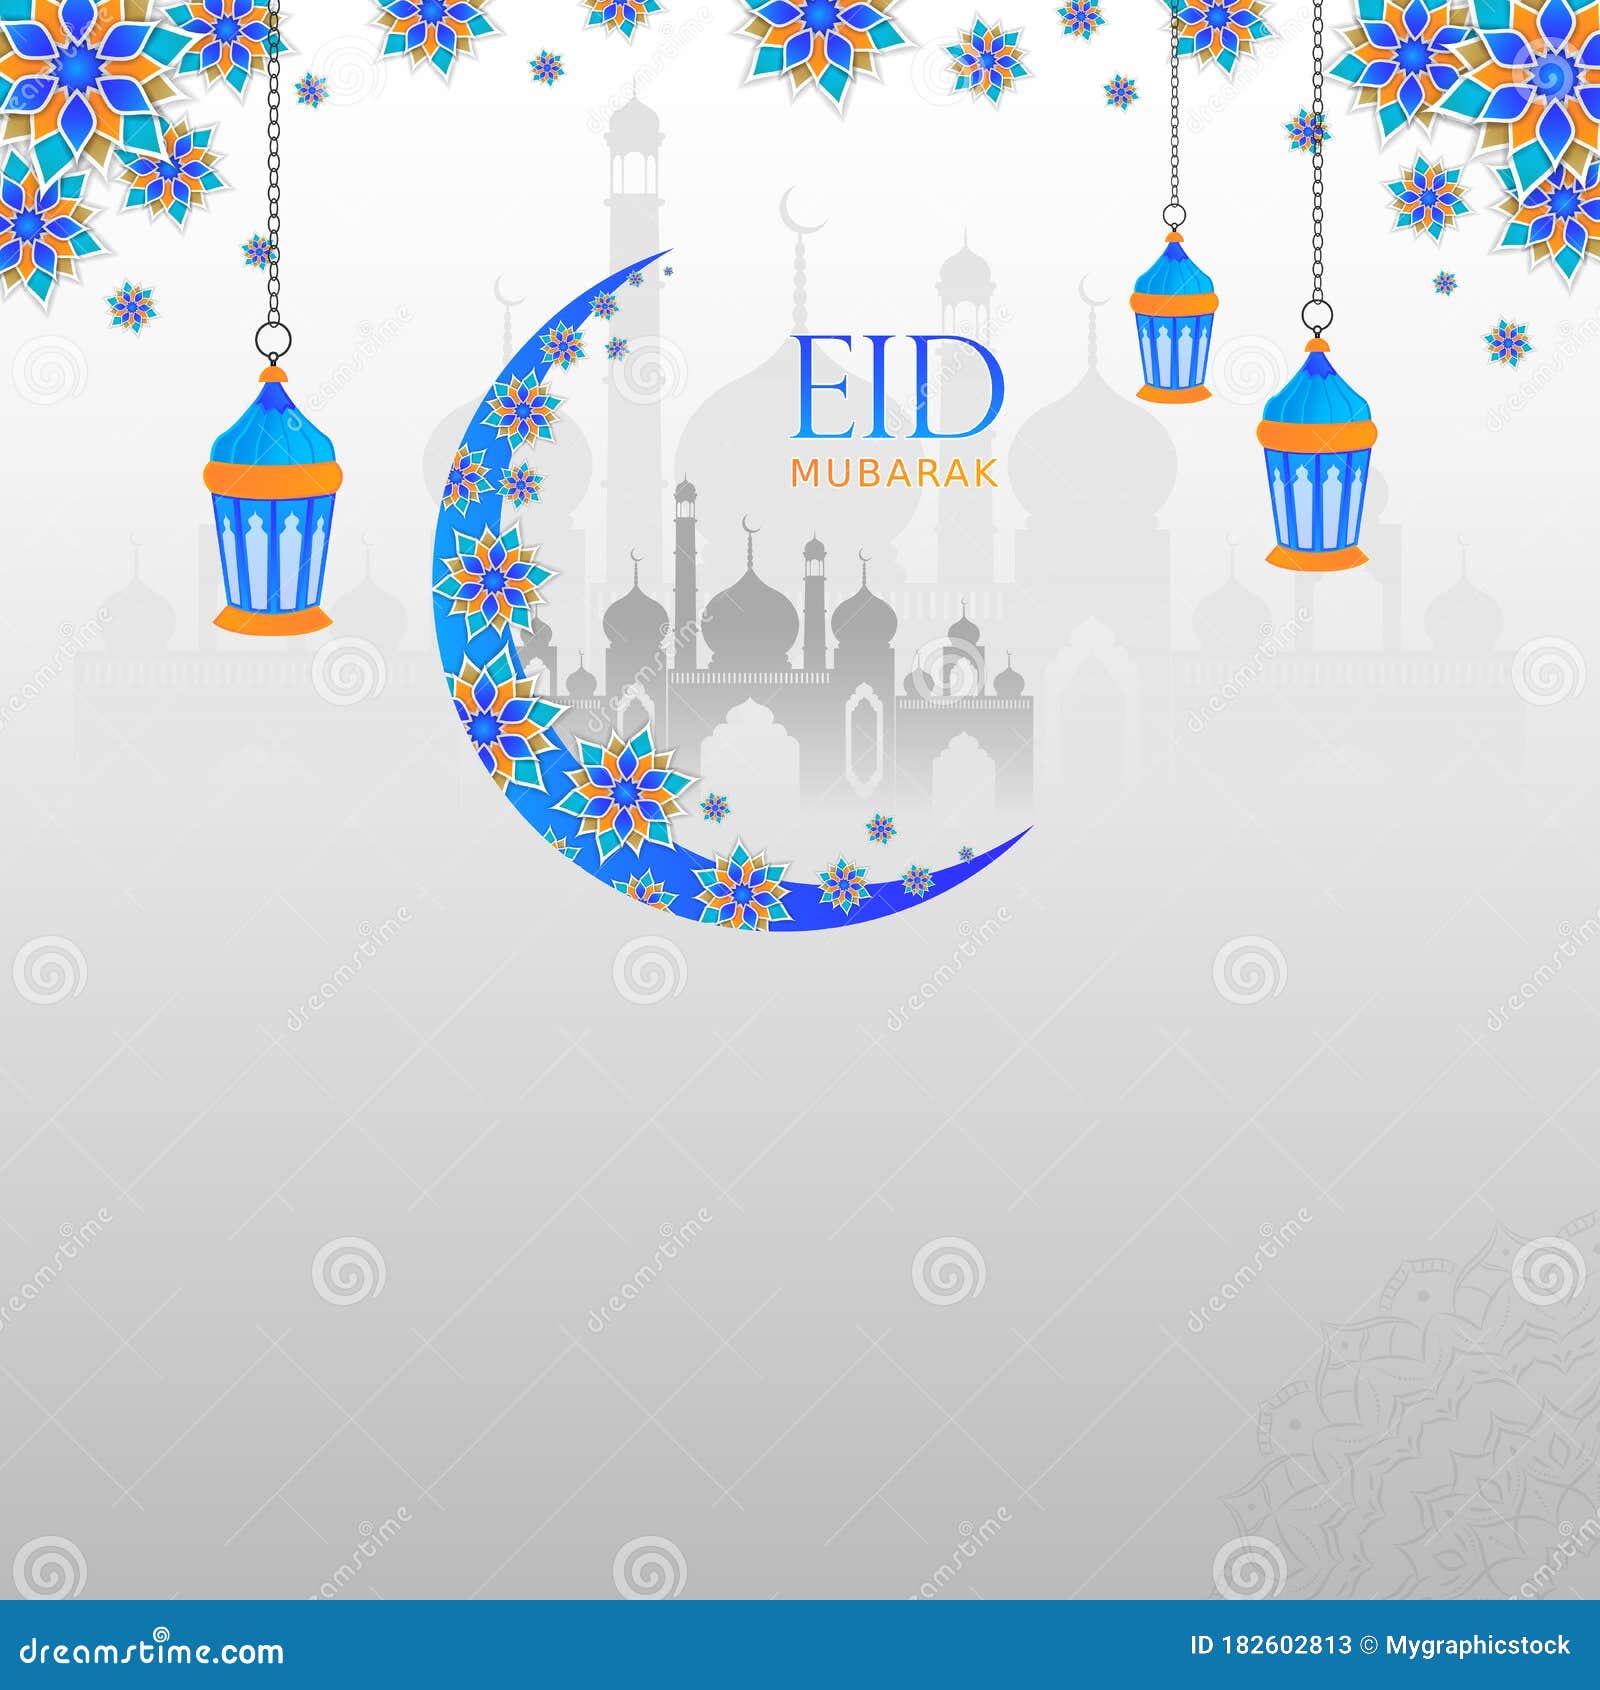 Eid mubarak greeting on blurred background Vector Image